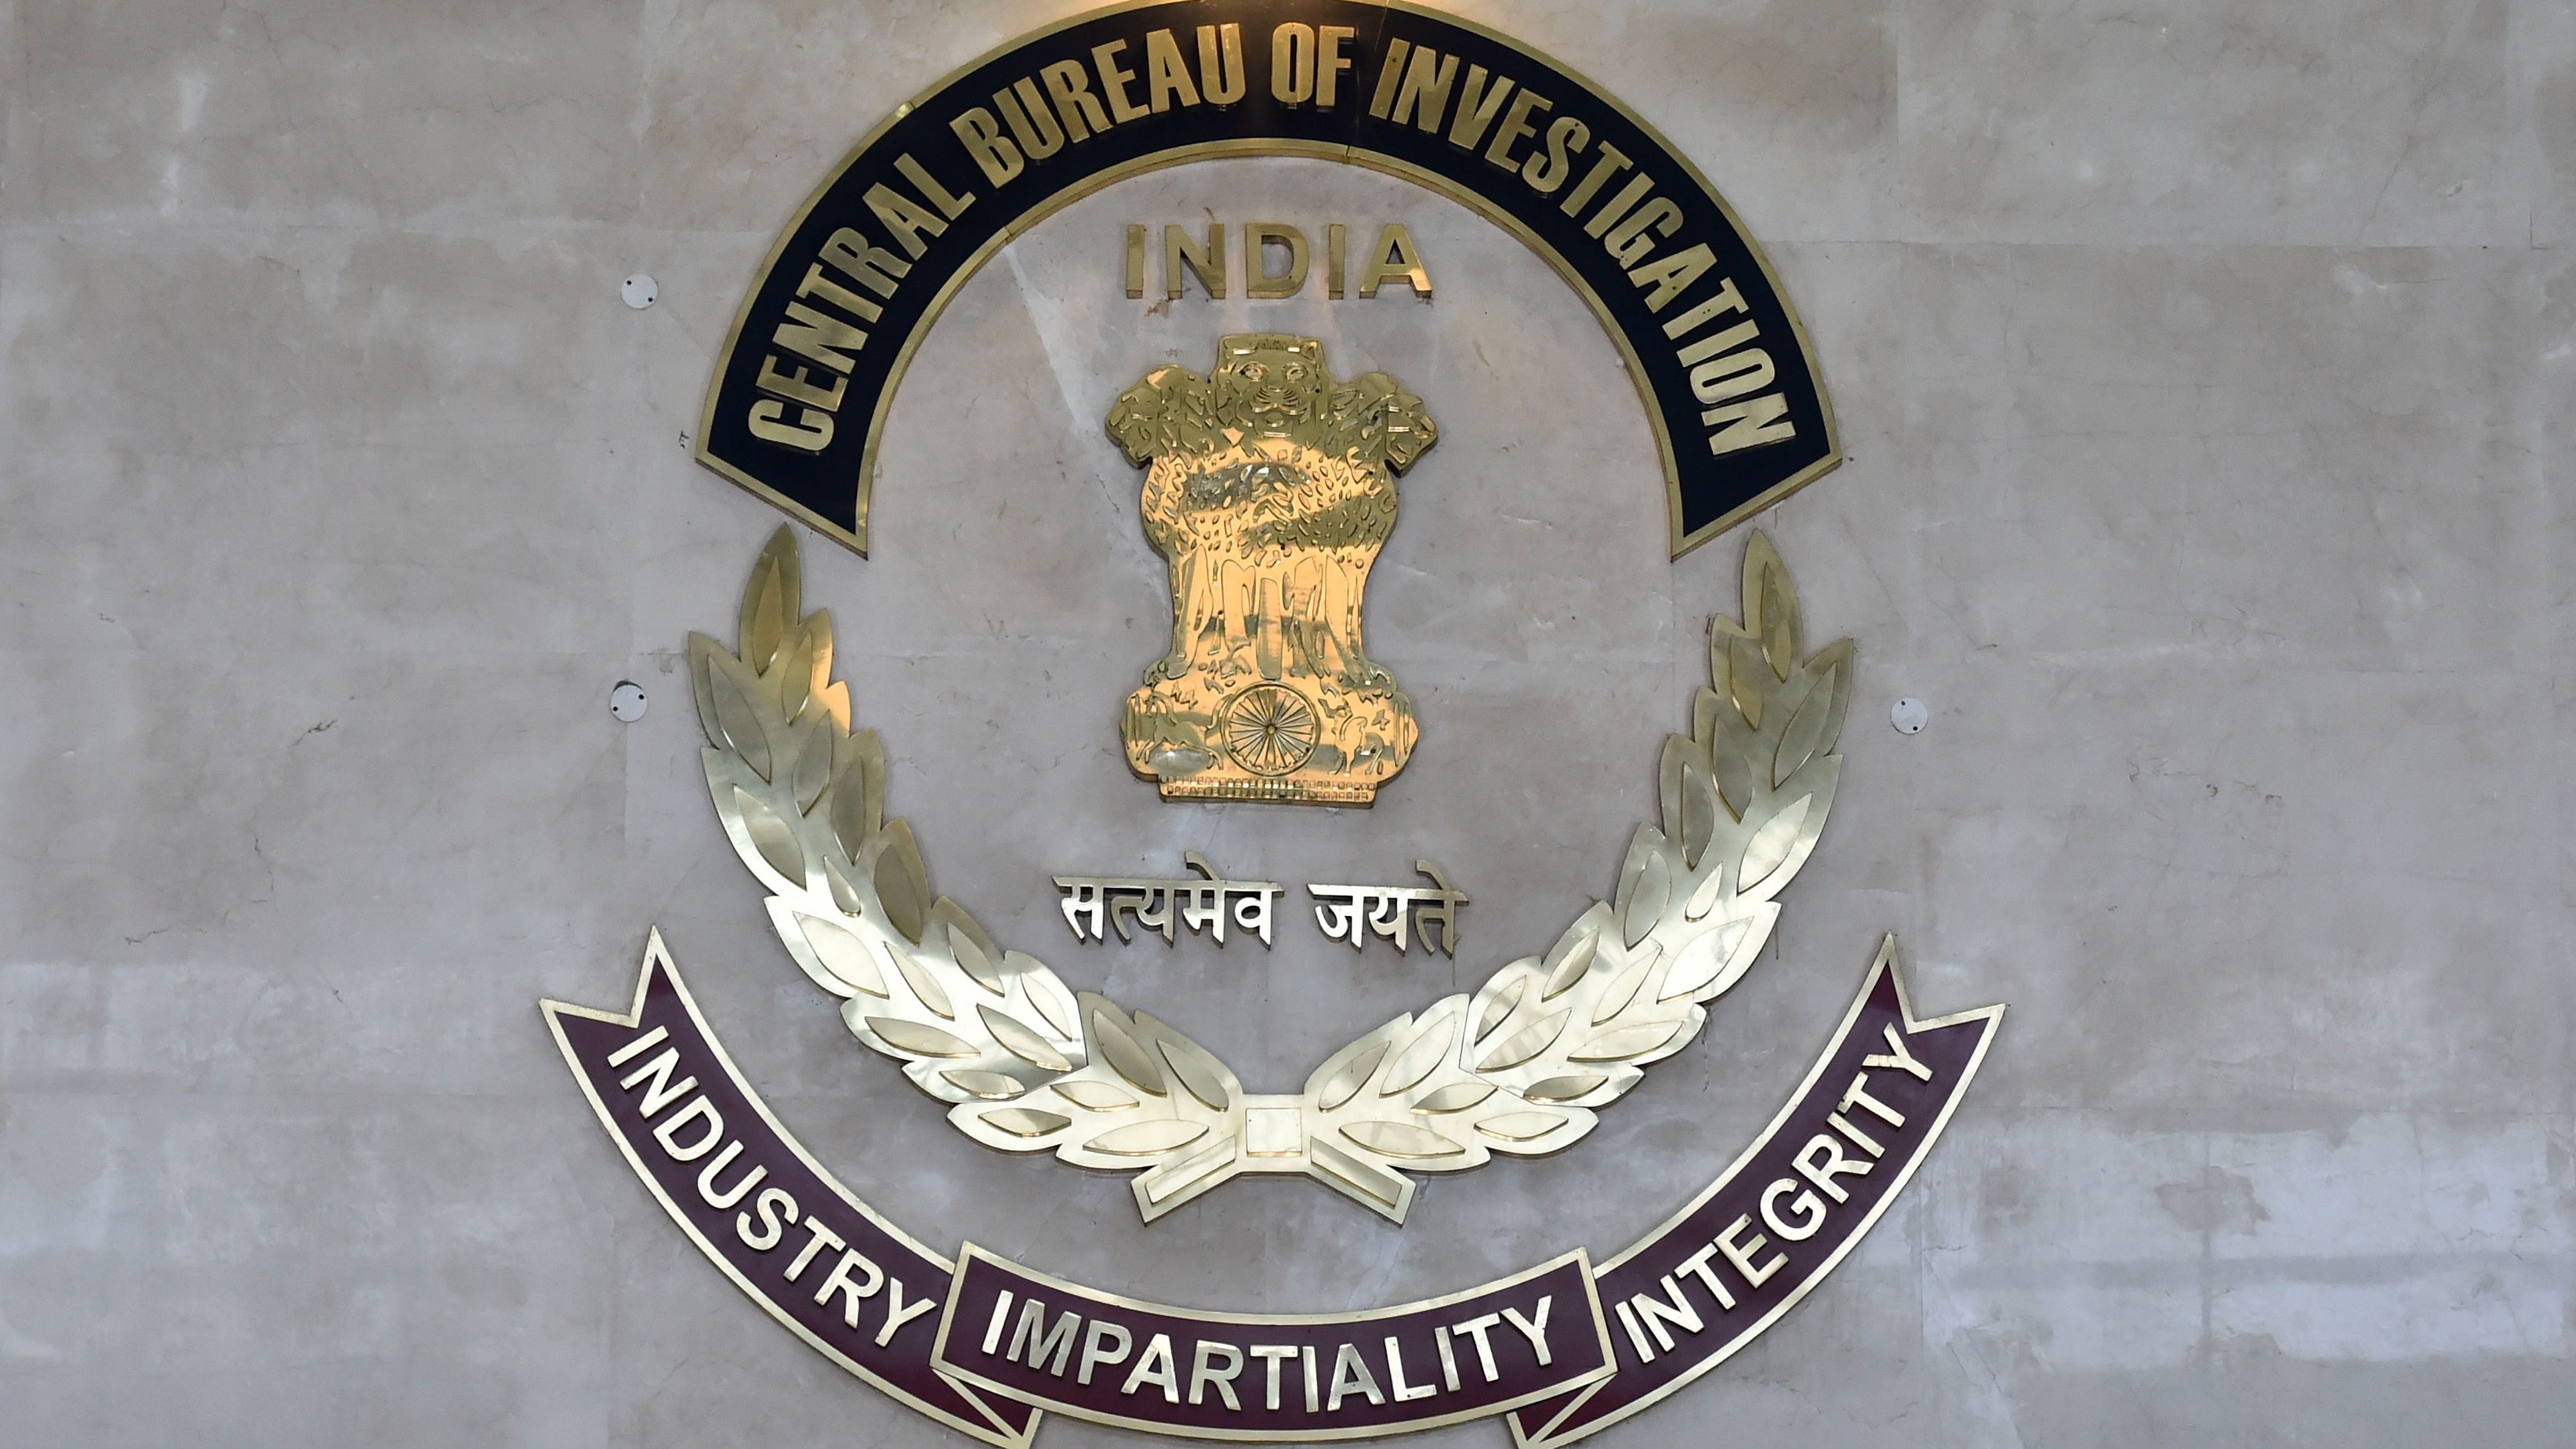 <div class="paragraphs"><p>Central Bureau of Investigation (CBI) logo at CBI HQ, in New Delhi.</p></div>